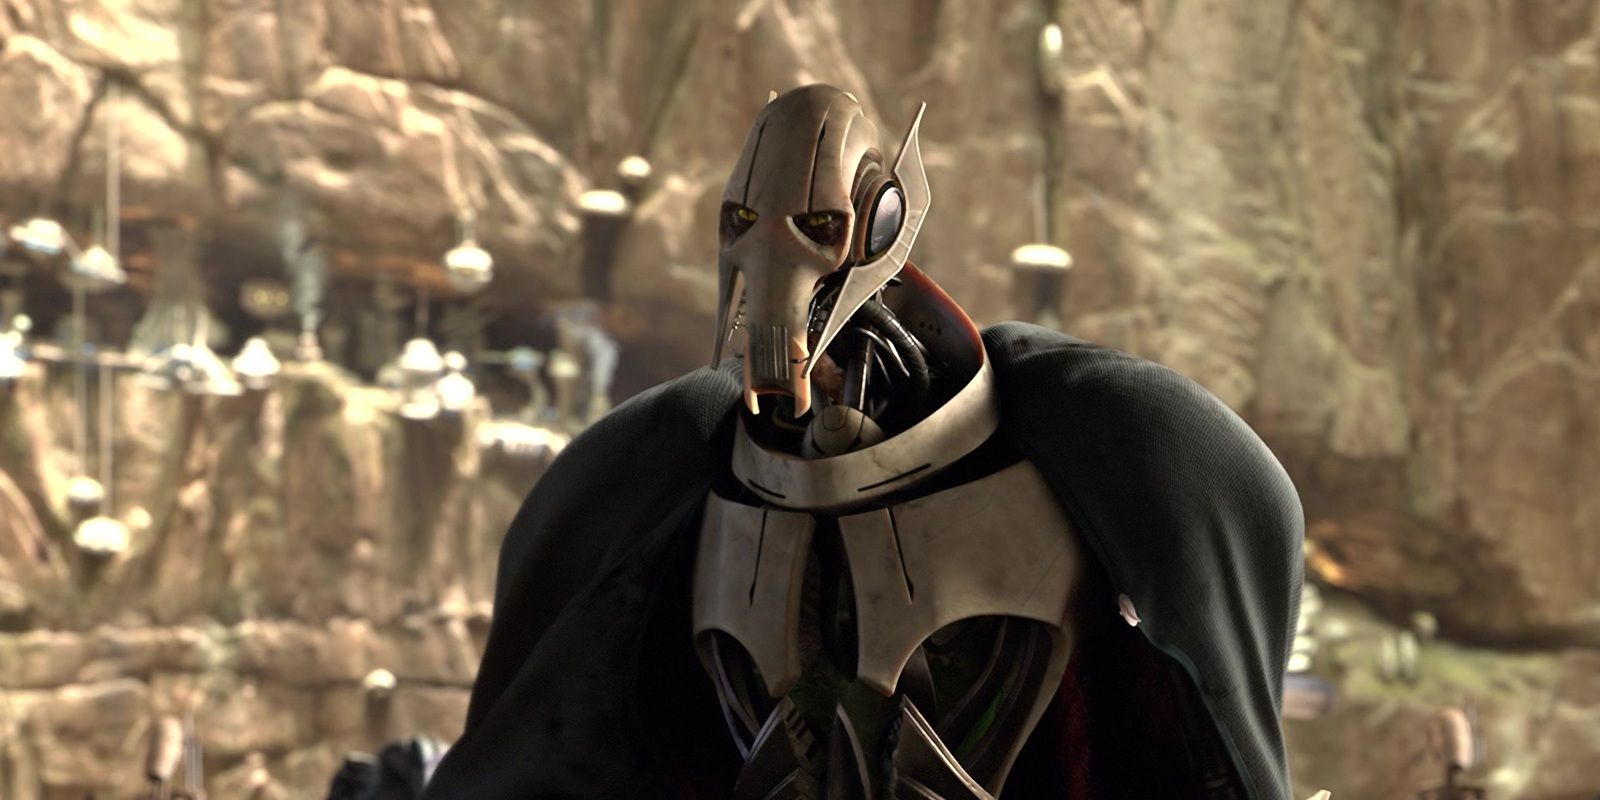 General Grievous in Star Wars Episode III Revenge of the Sith